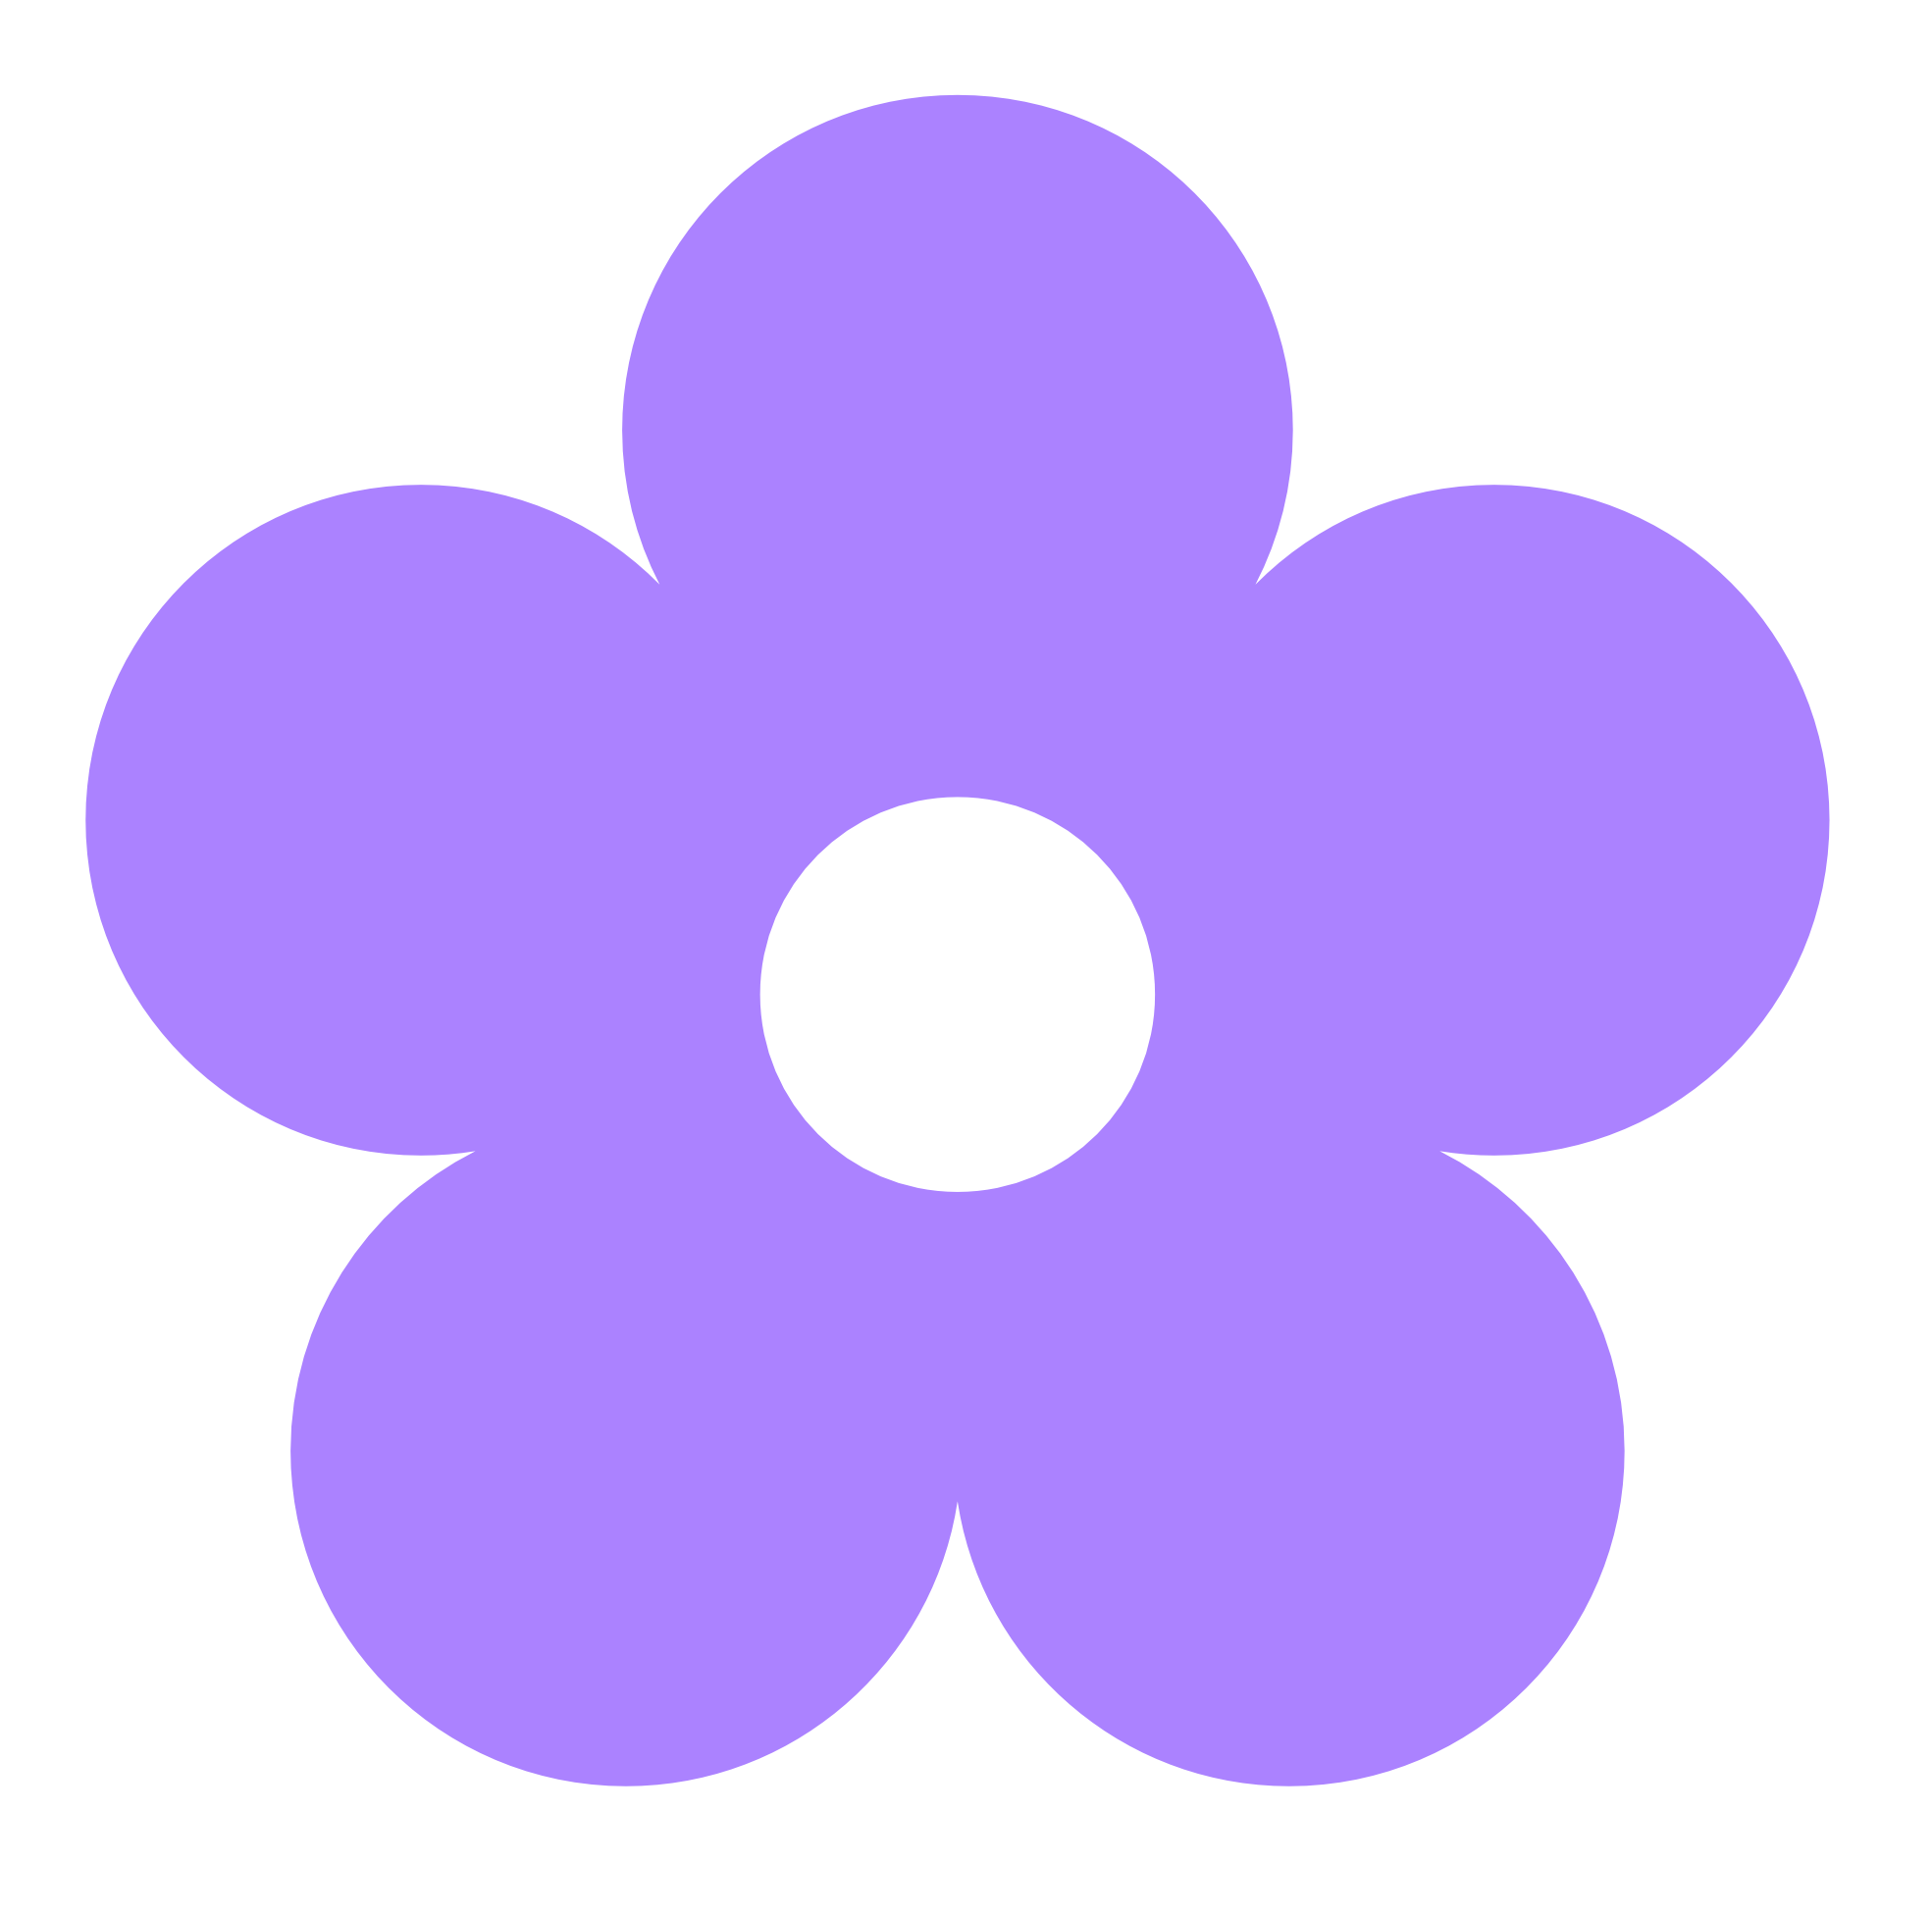 daisy clipart violet